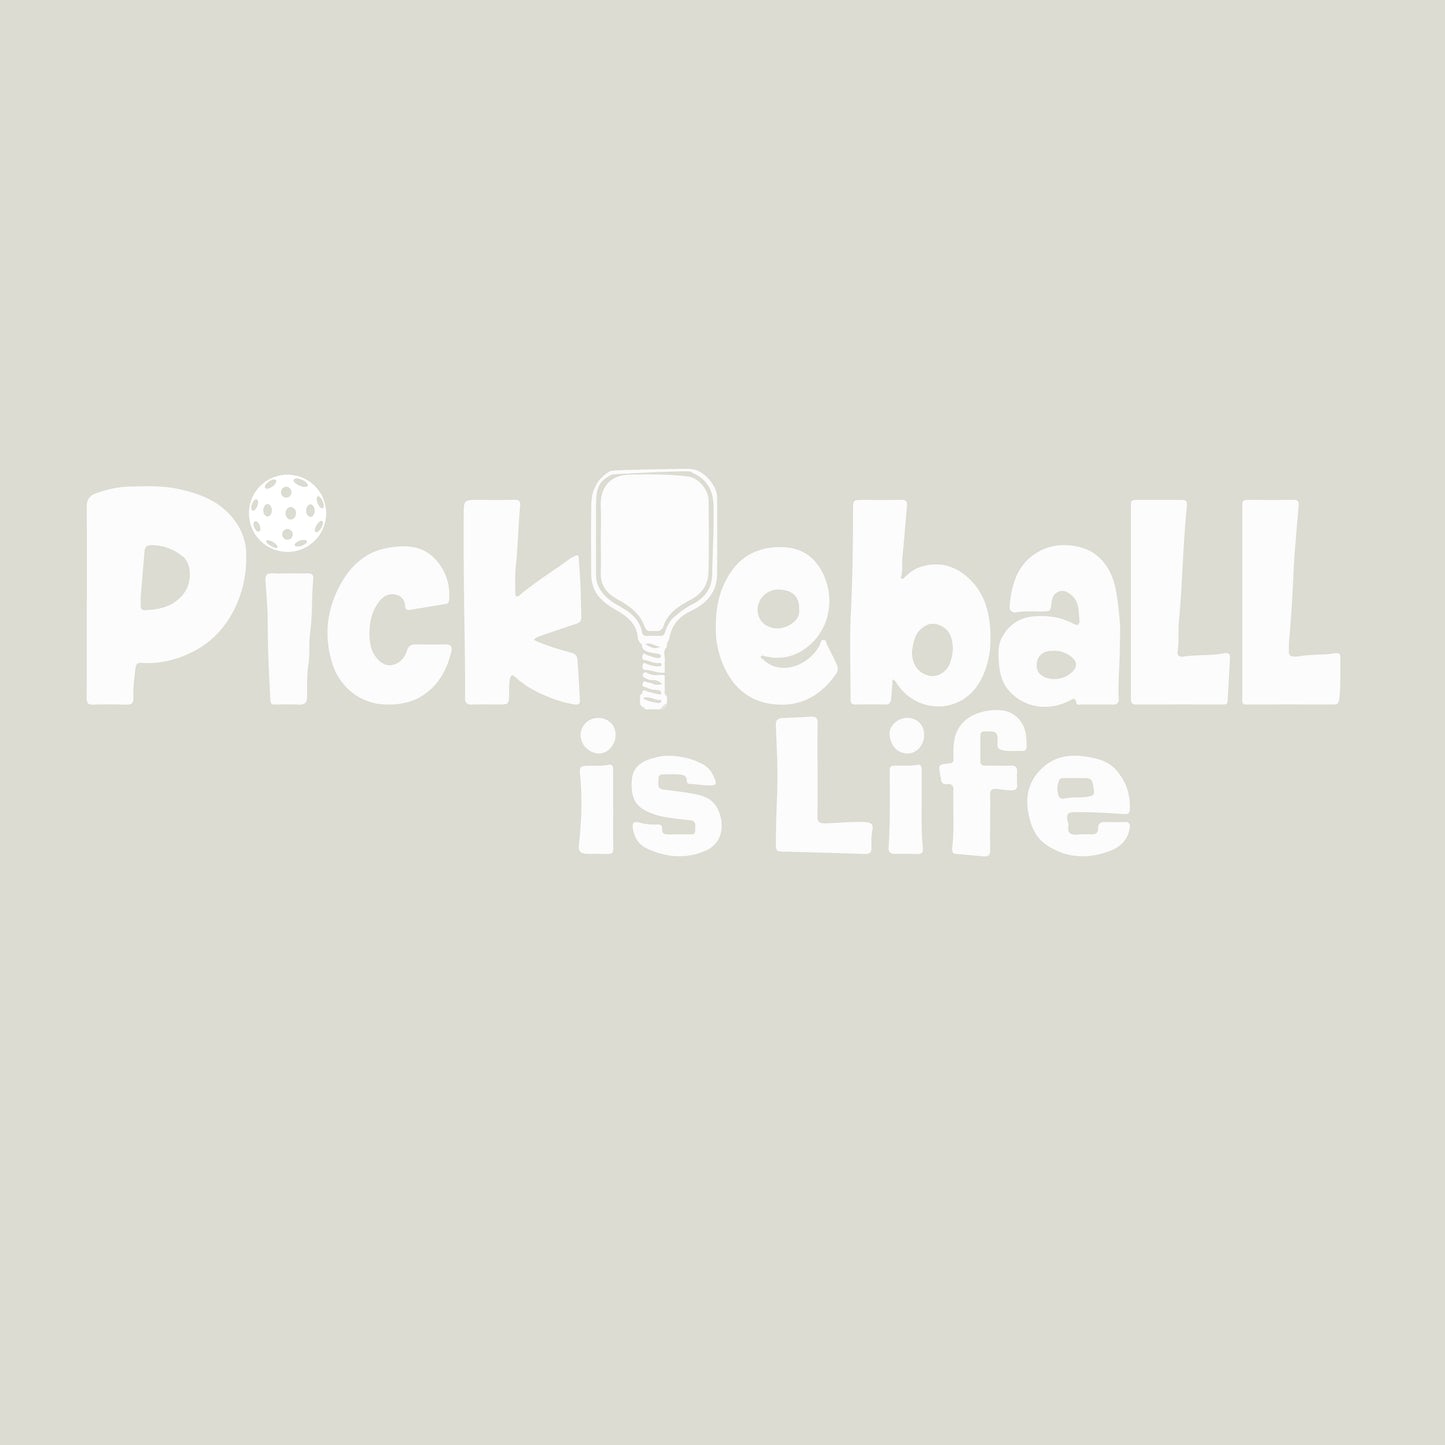 Pickleball is Life | Pickleball Sports Duffel | Medium Size Court Bag